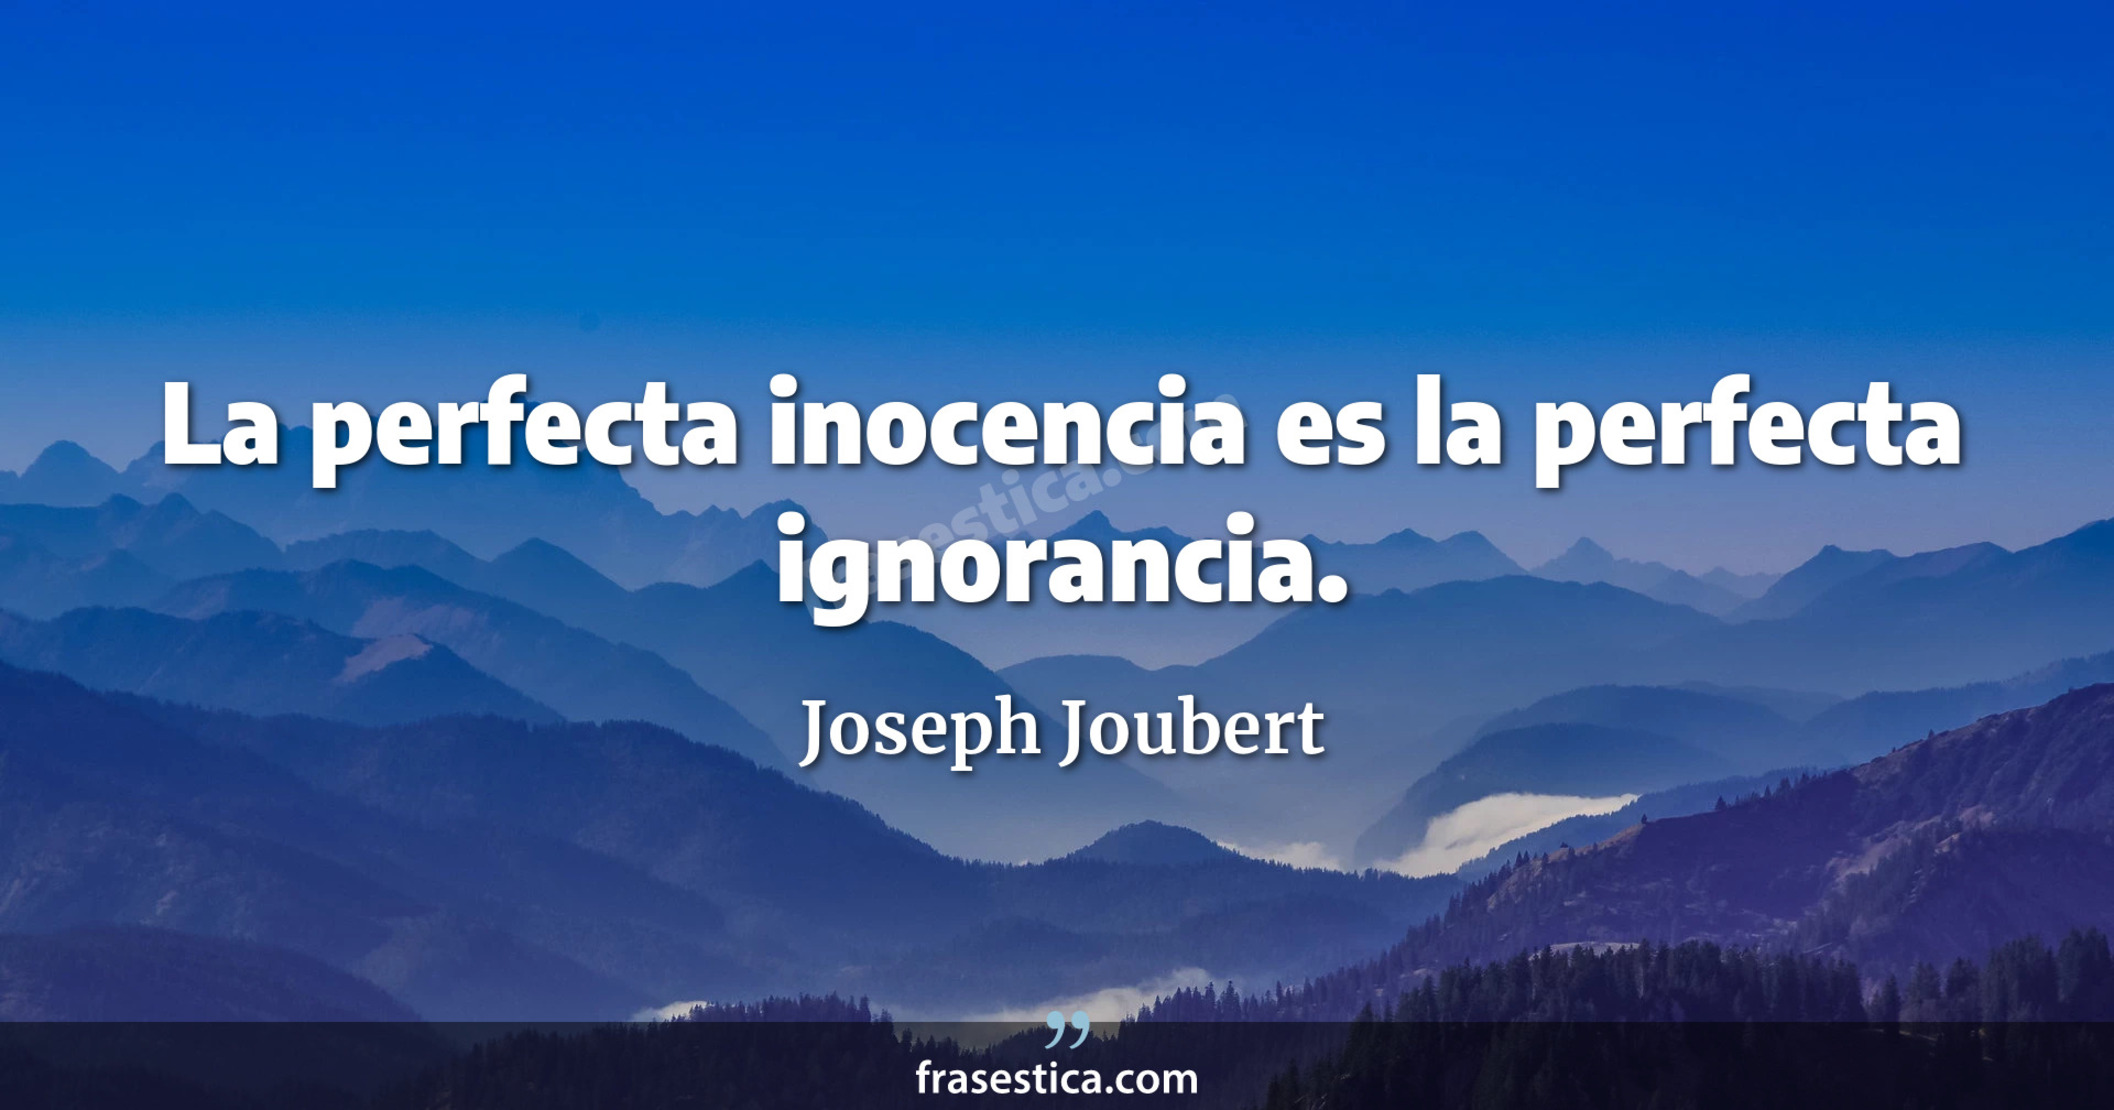 La perfecta inocencia es la perfecta ignorancia. - Joseph Joubert